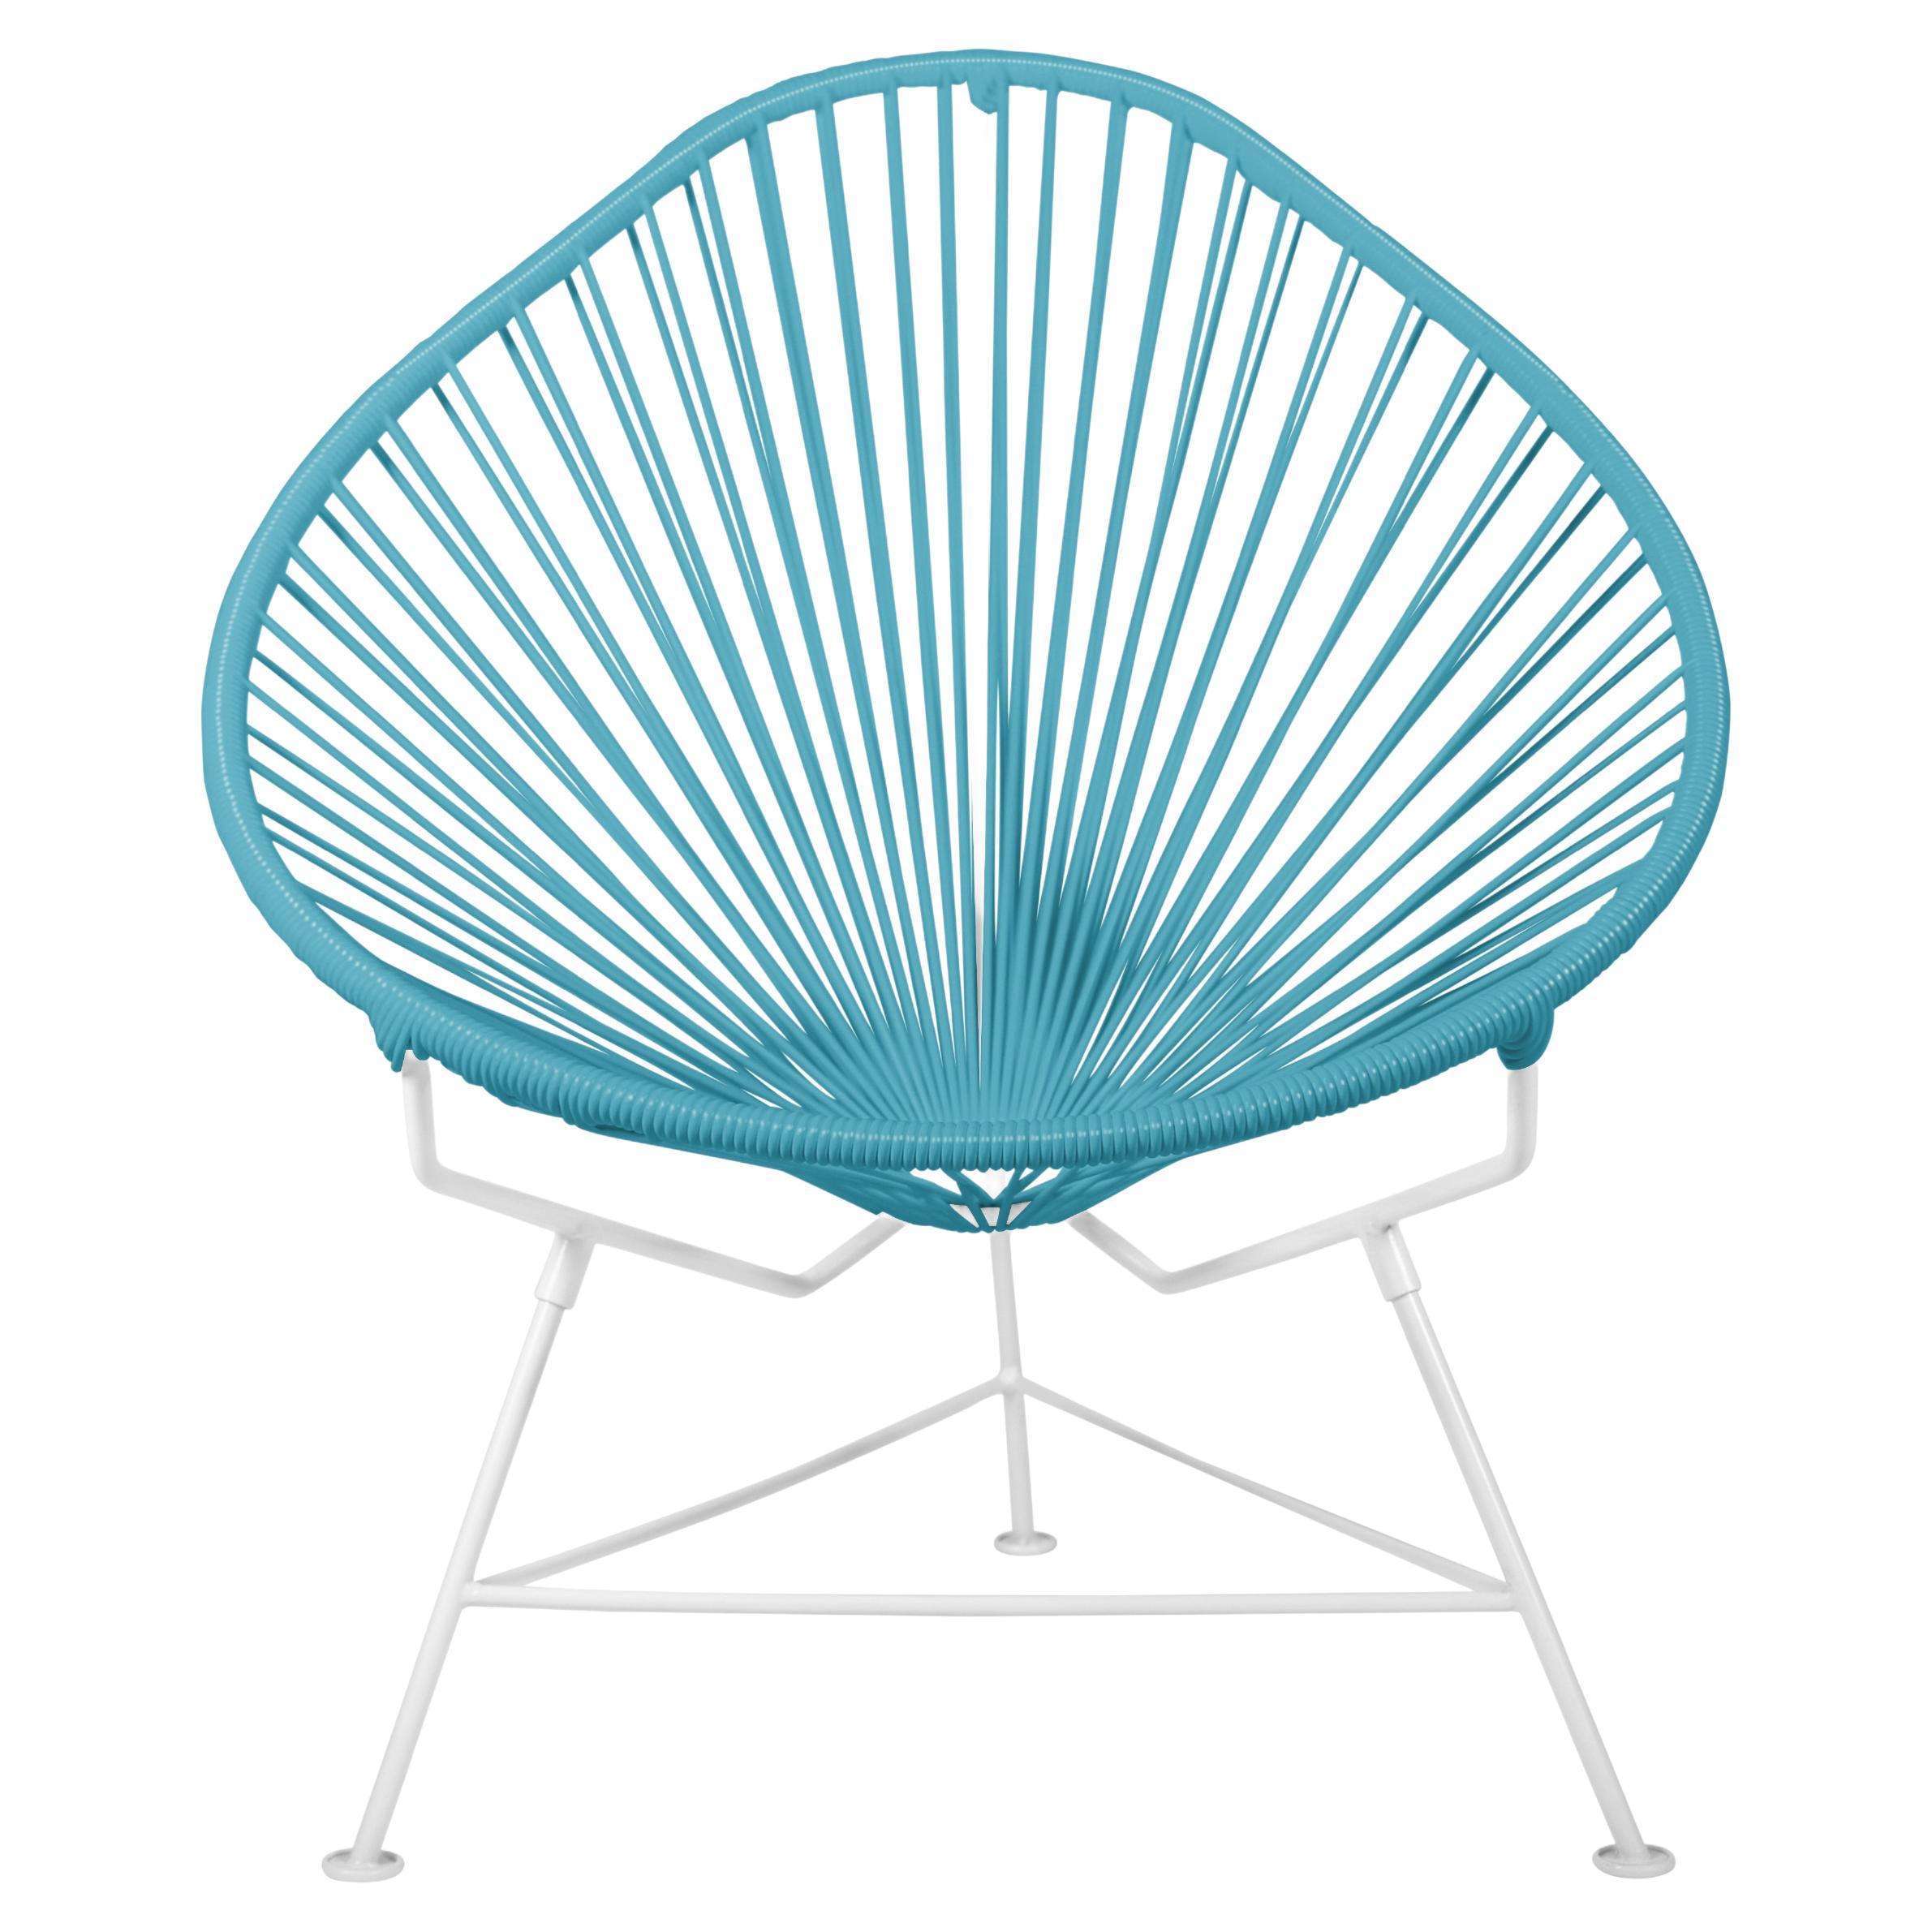 Innit Designs - Chaise Acapulco - Tissage bleu sur cadre blanc